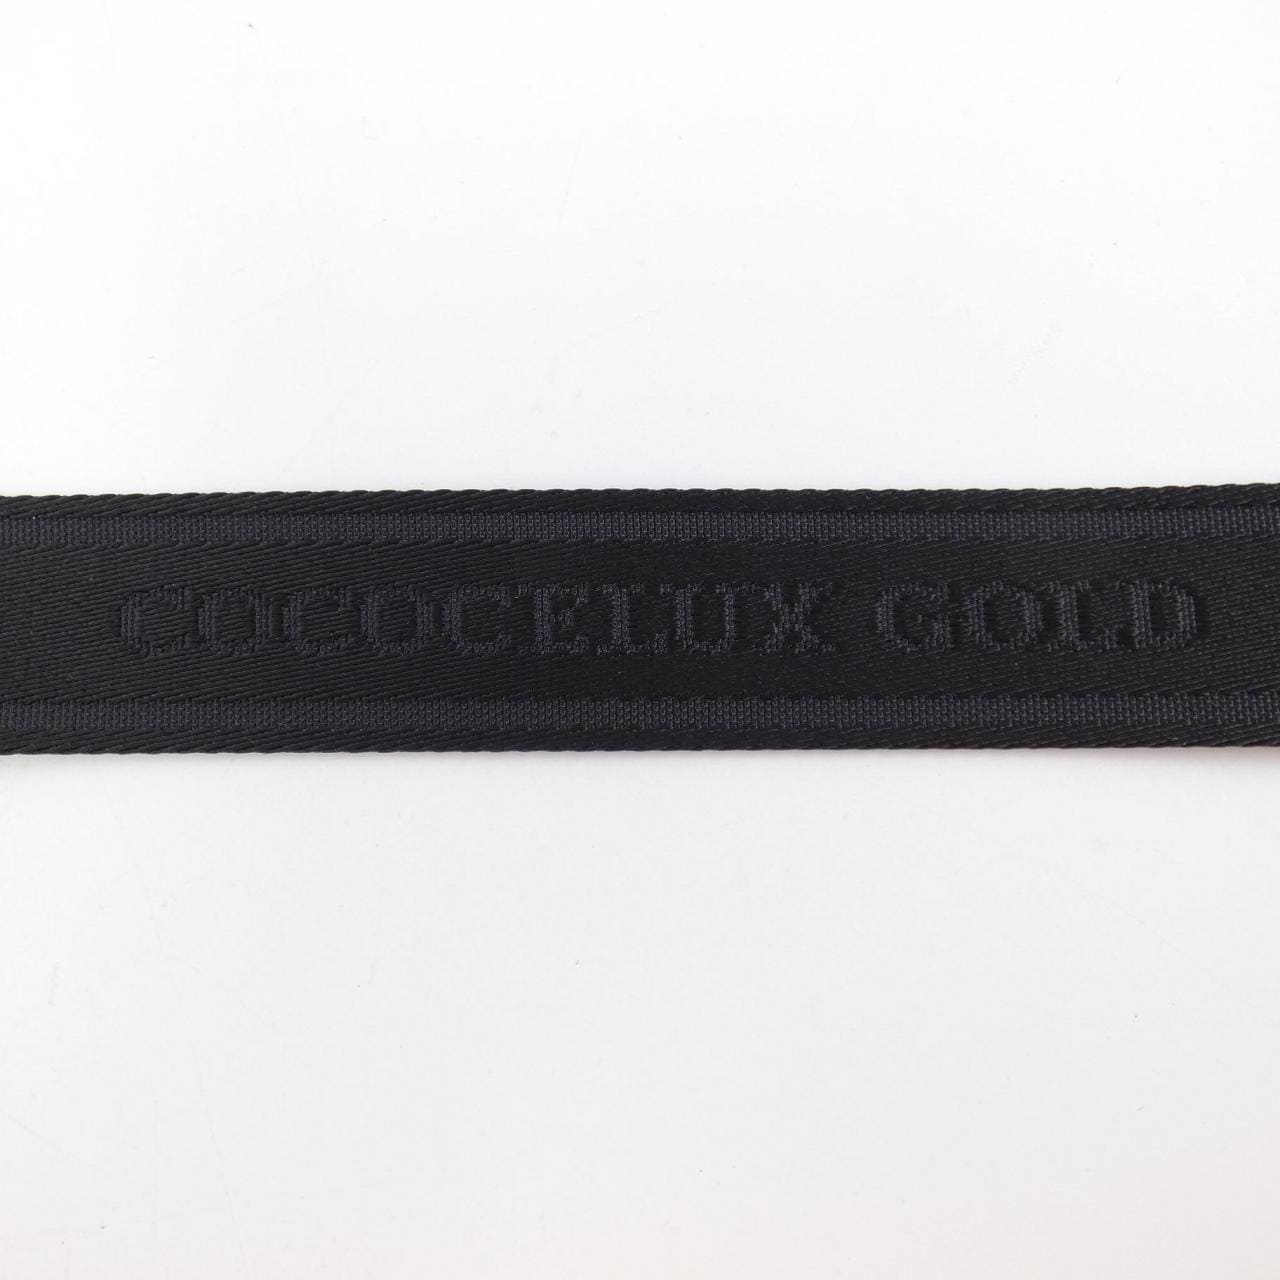 COCOCELUX GOLD GOLD Strap